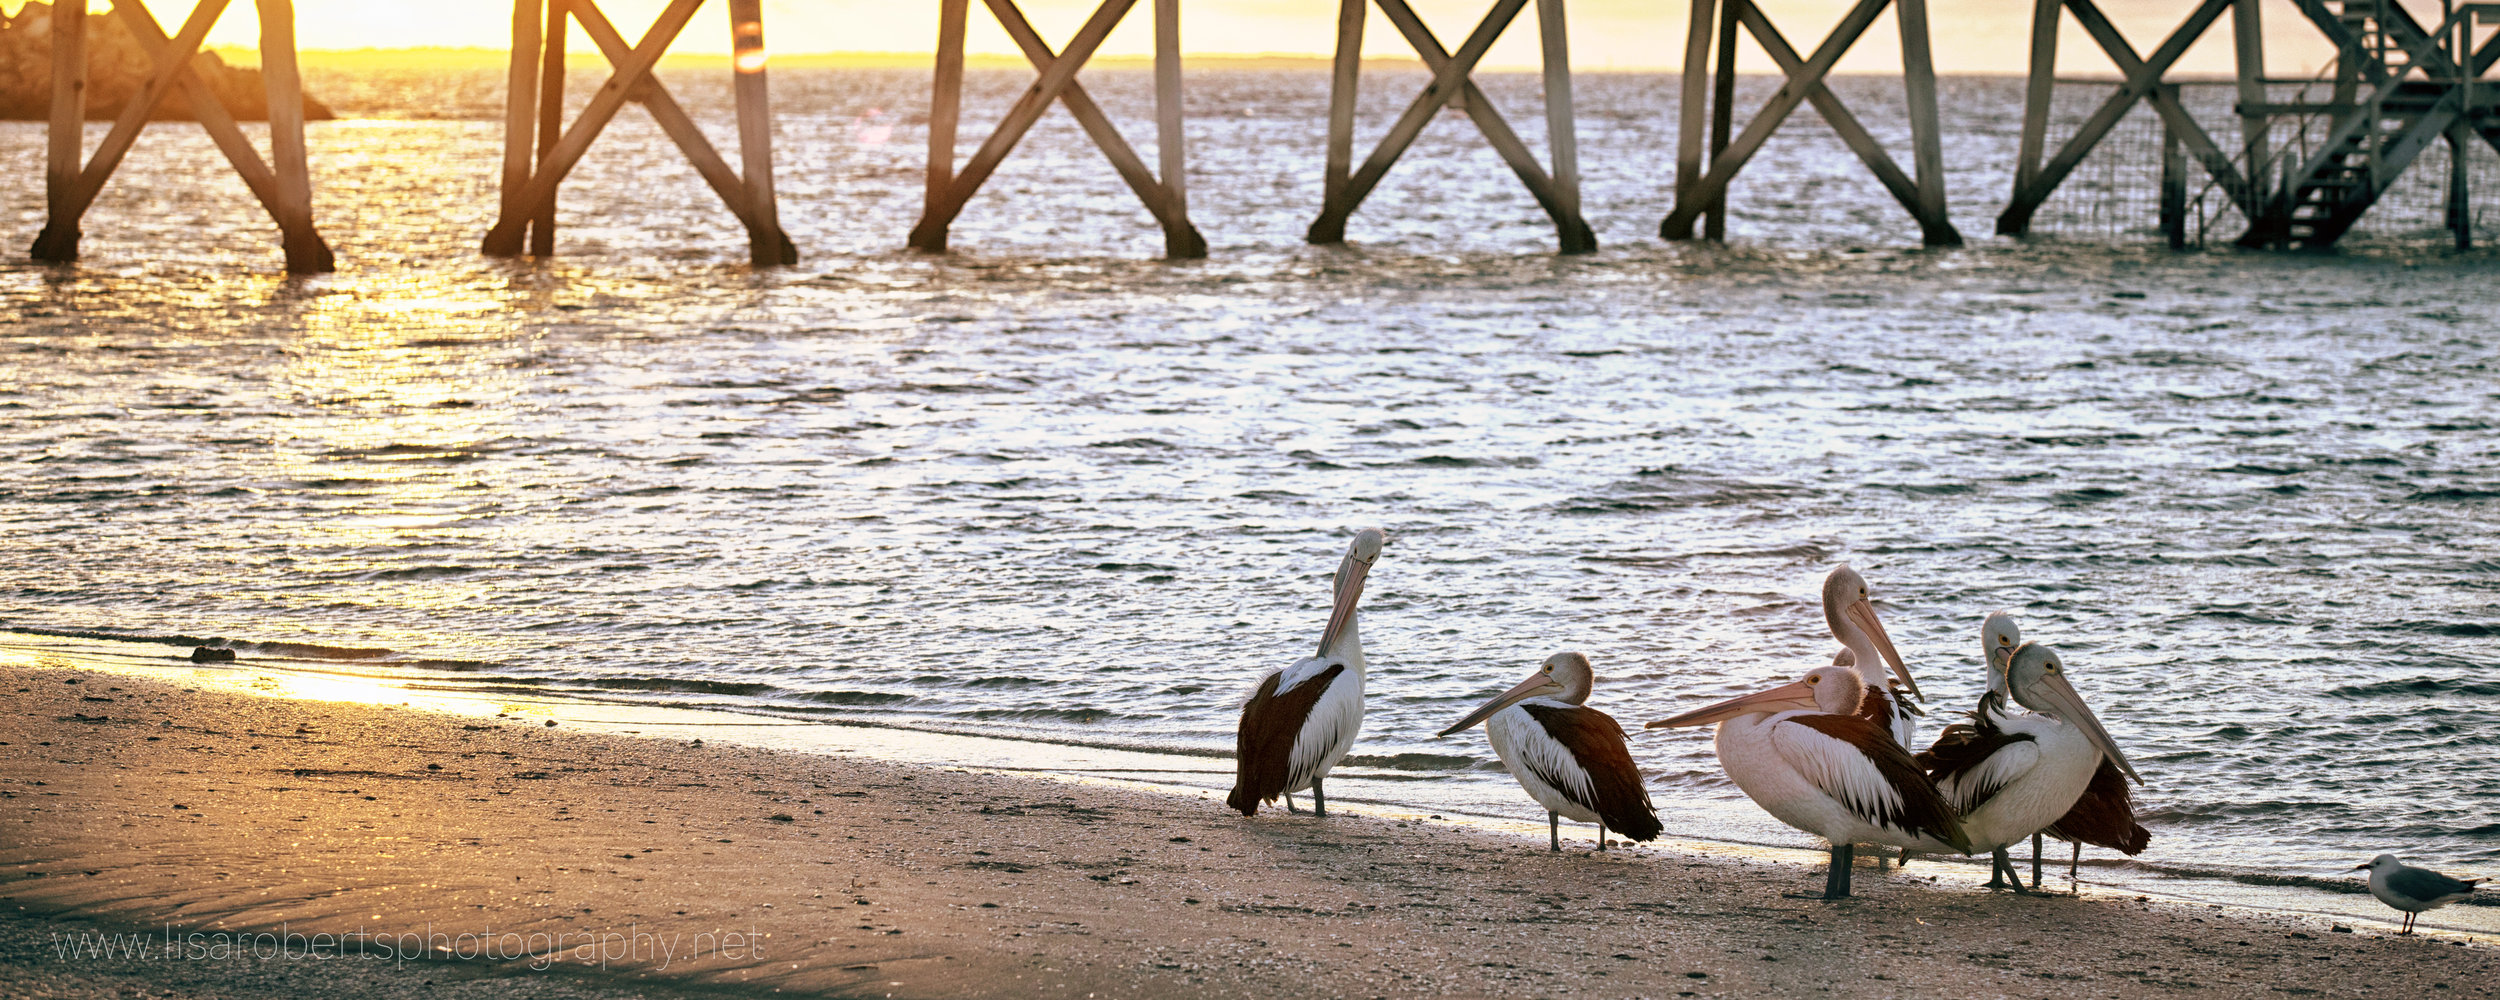  Pelicans of Smoky Bay, South Australia 